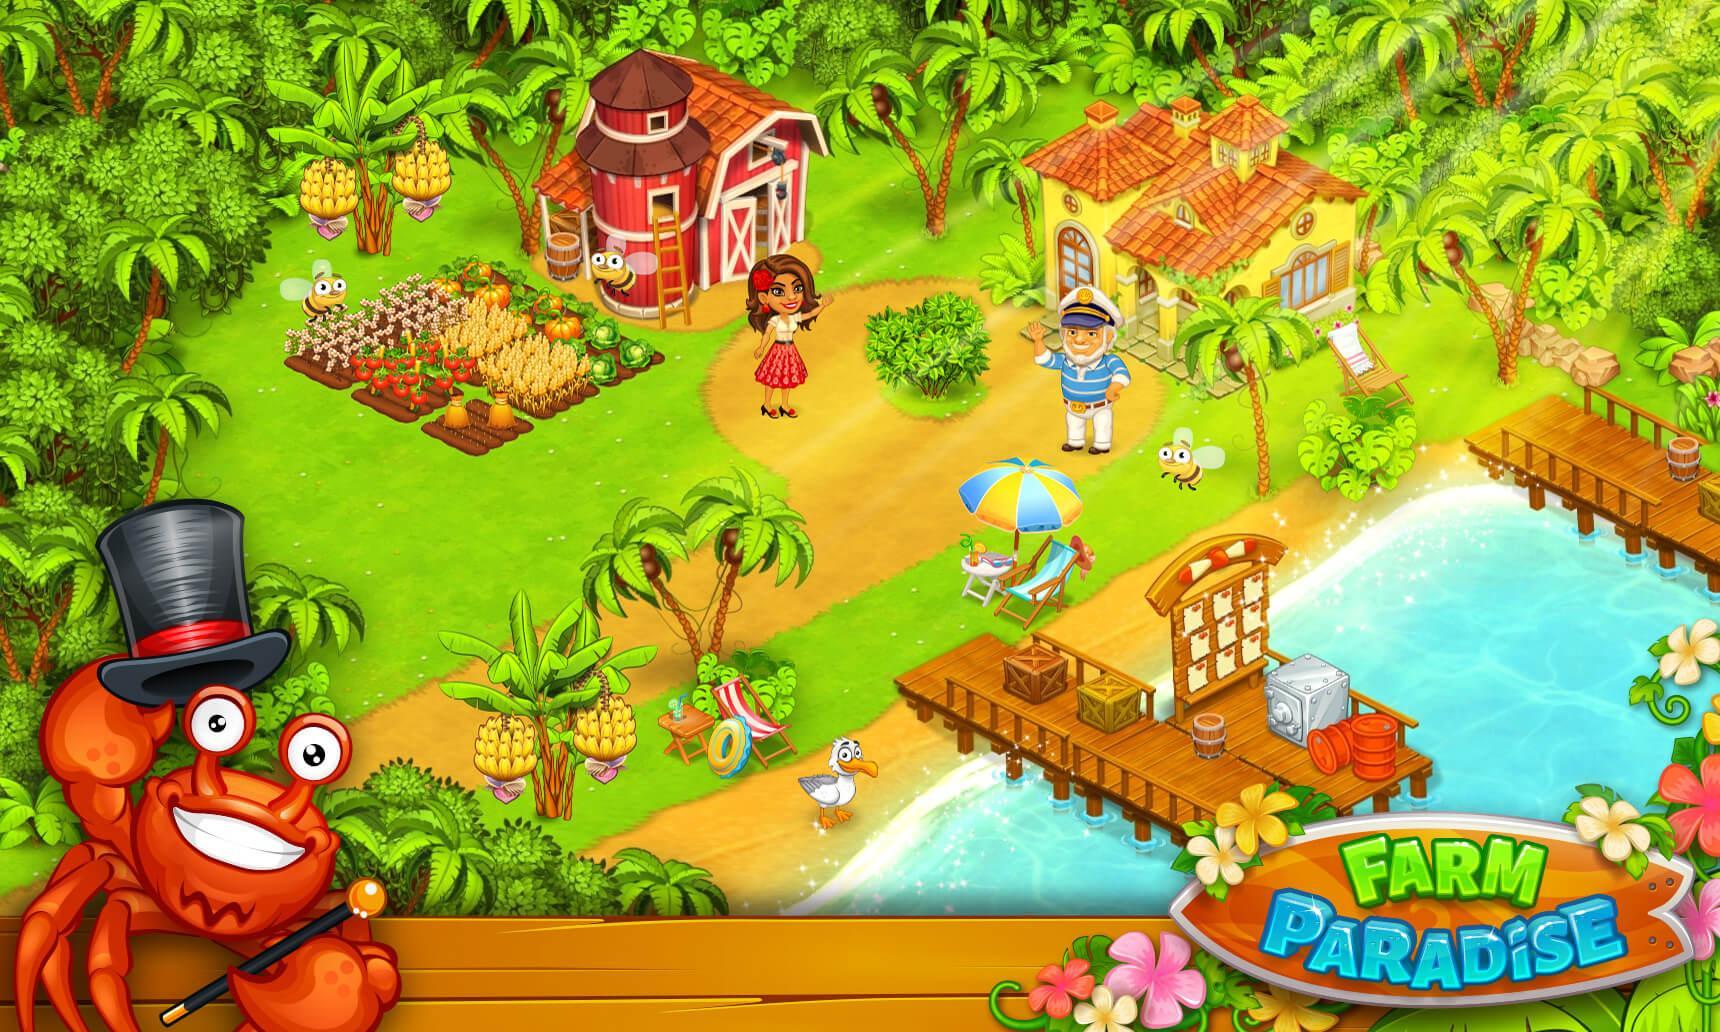 Farm Paradise Fun farm trade game at lost island 2.17 Screenshot 7